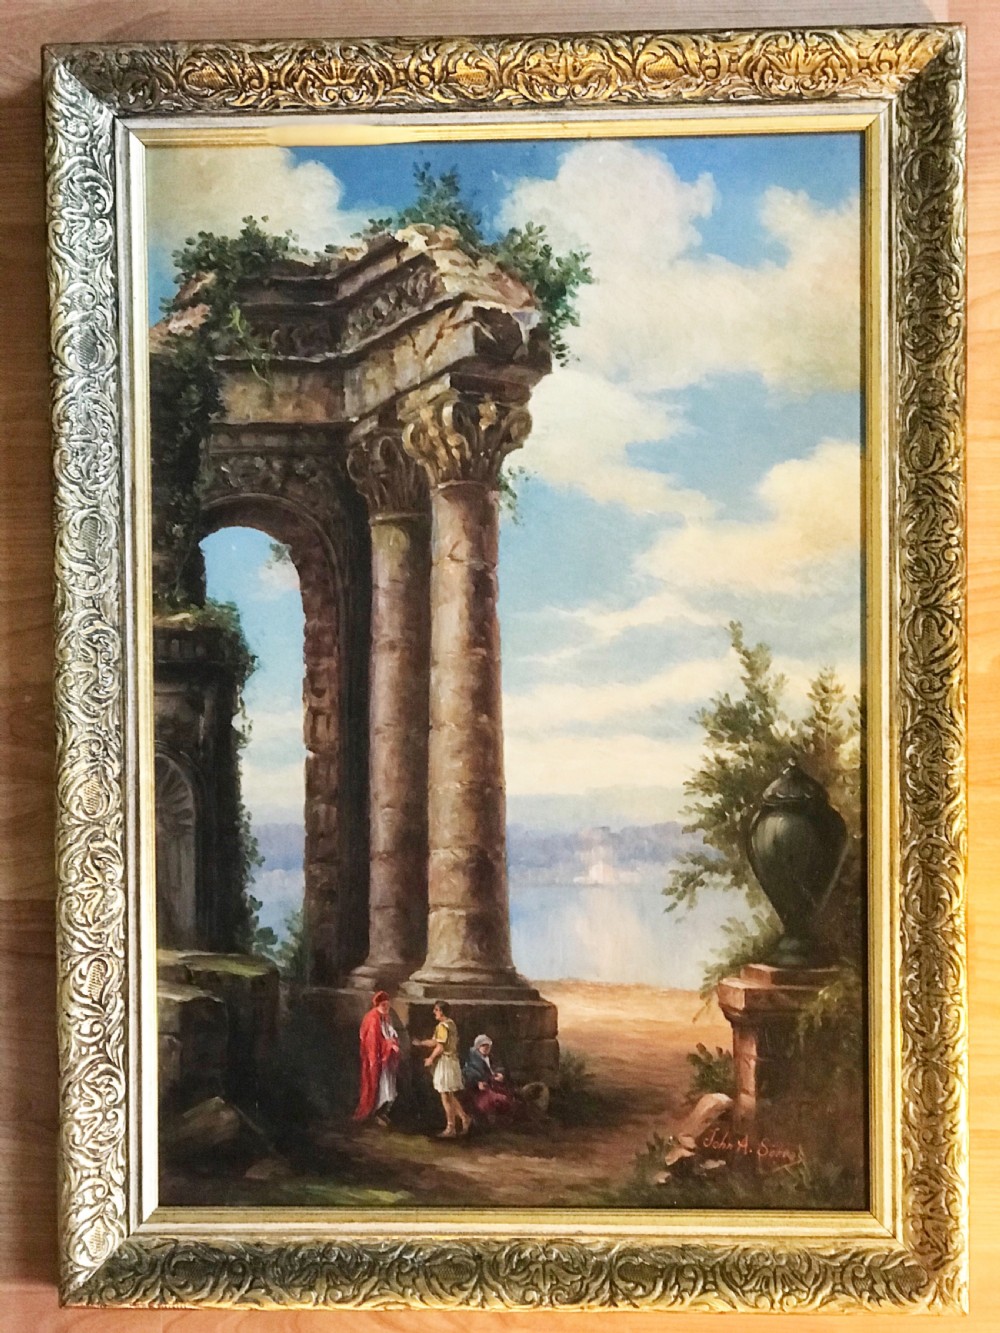 capriccio oil painting after francesco guardi 17121793 figurative portrait landscape italy rome